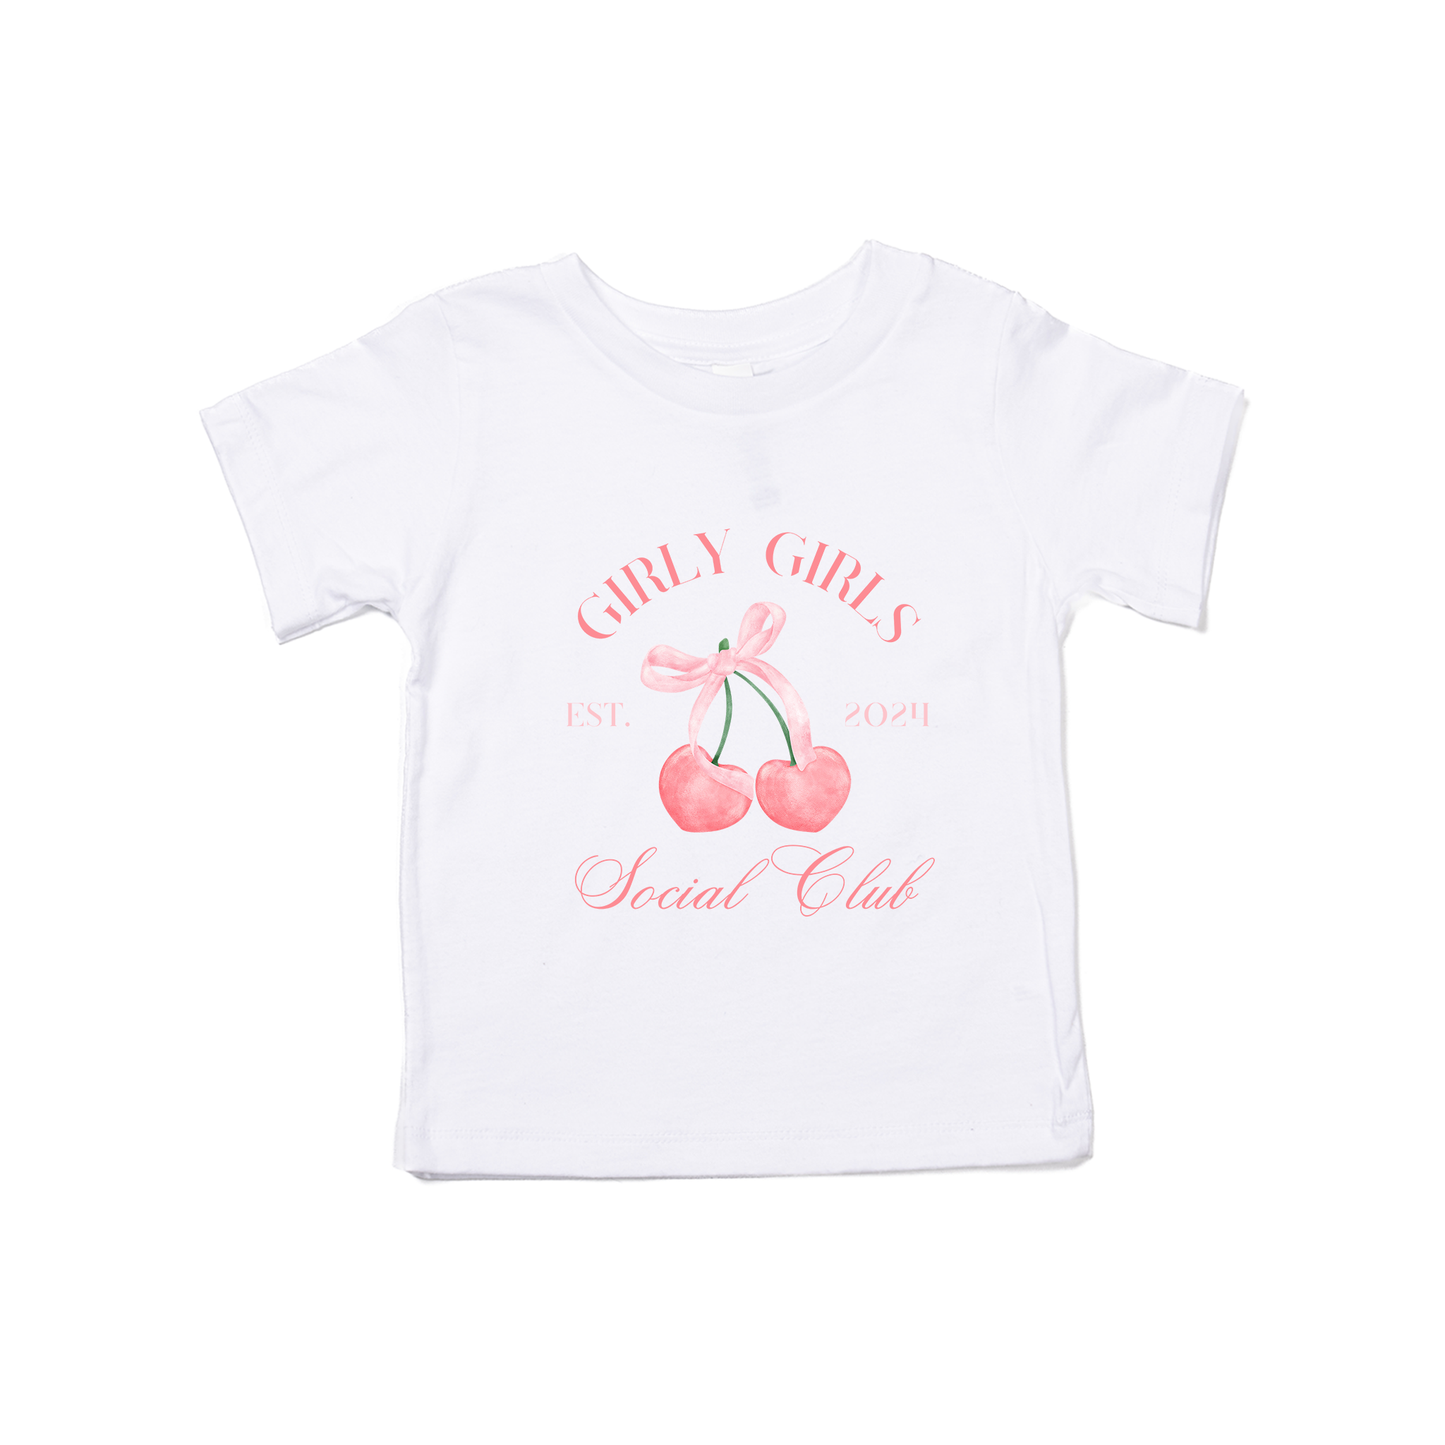 Girly Girls Social Club - Kids Tee (White)